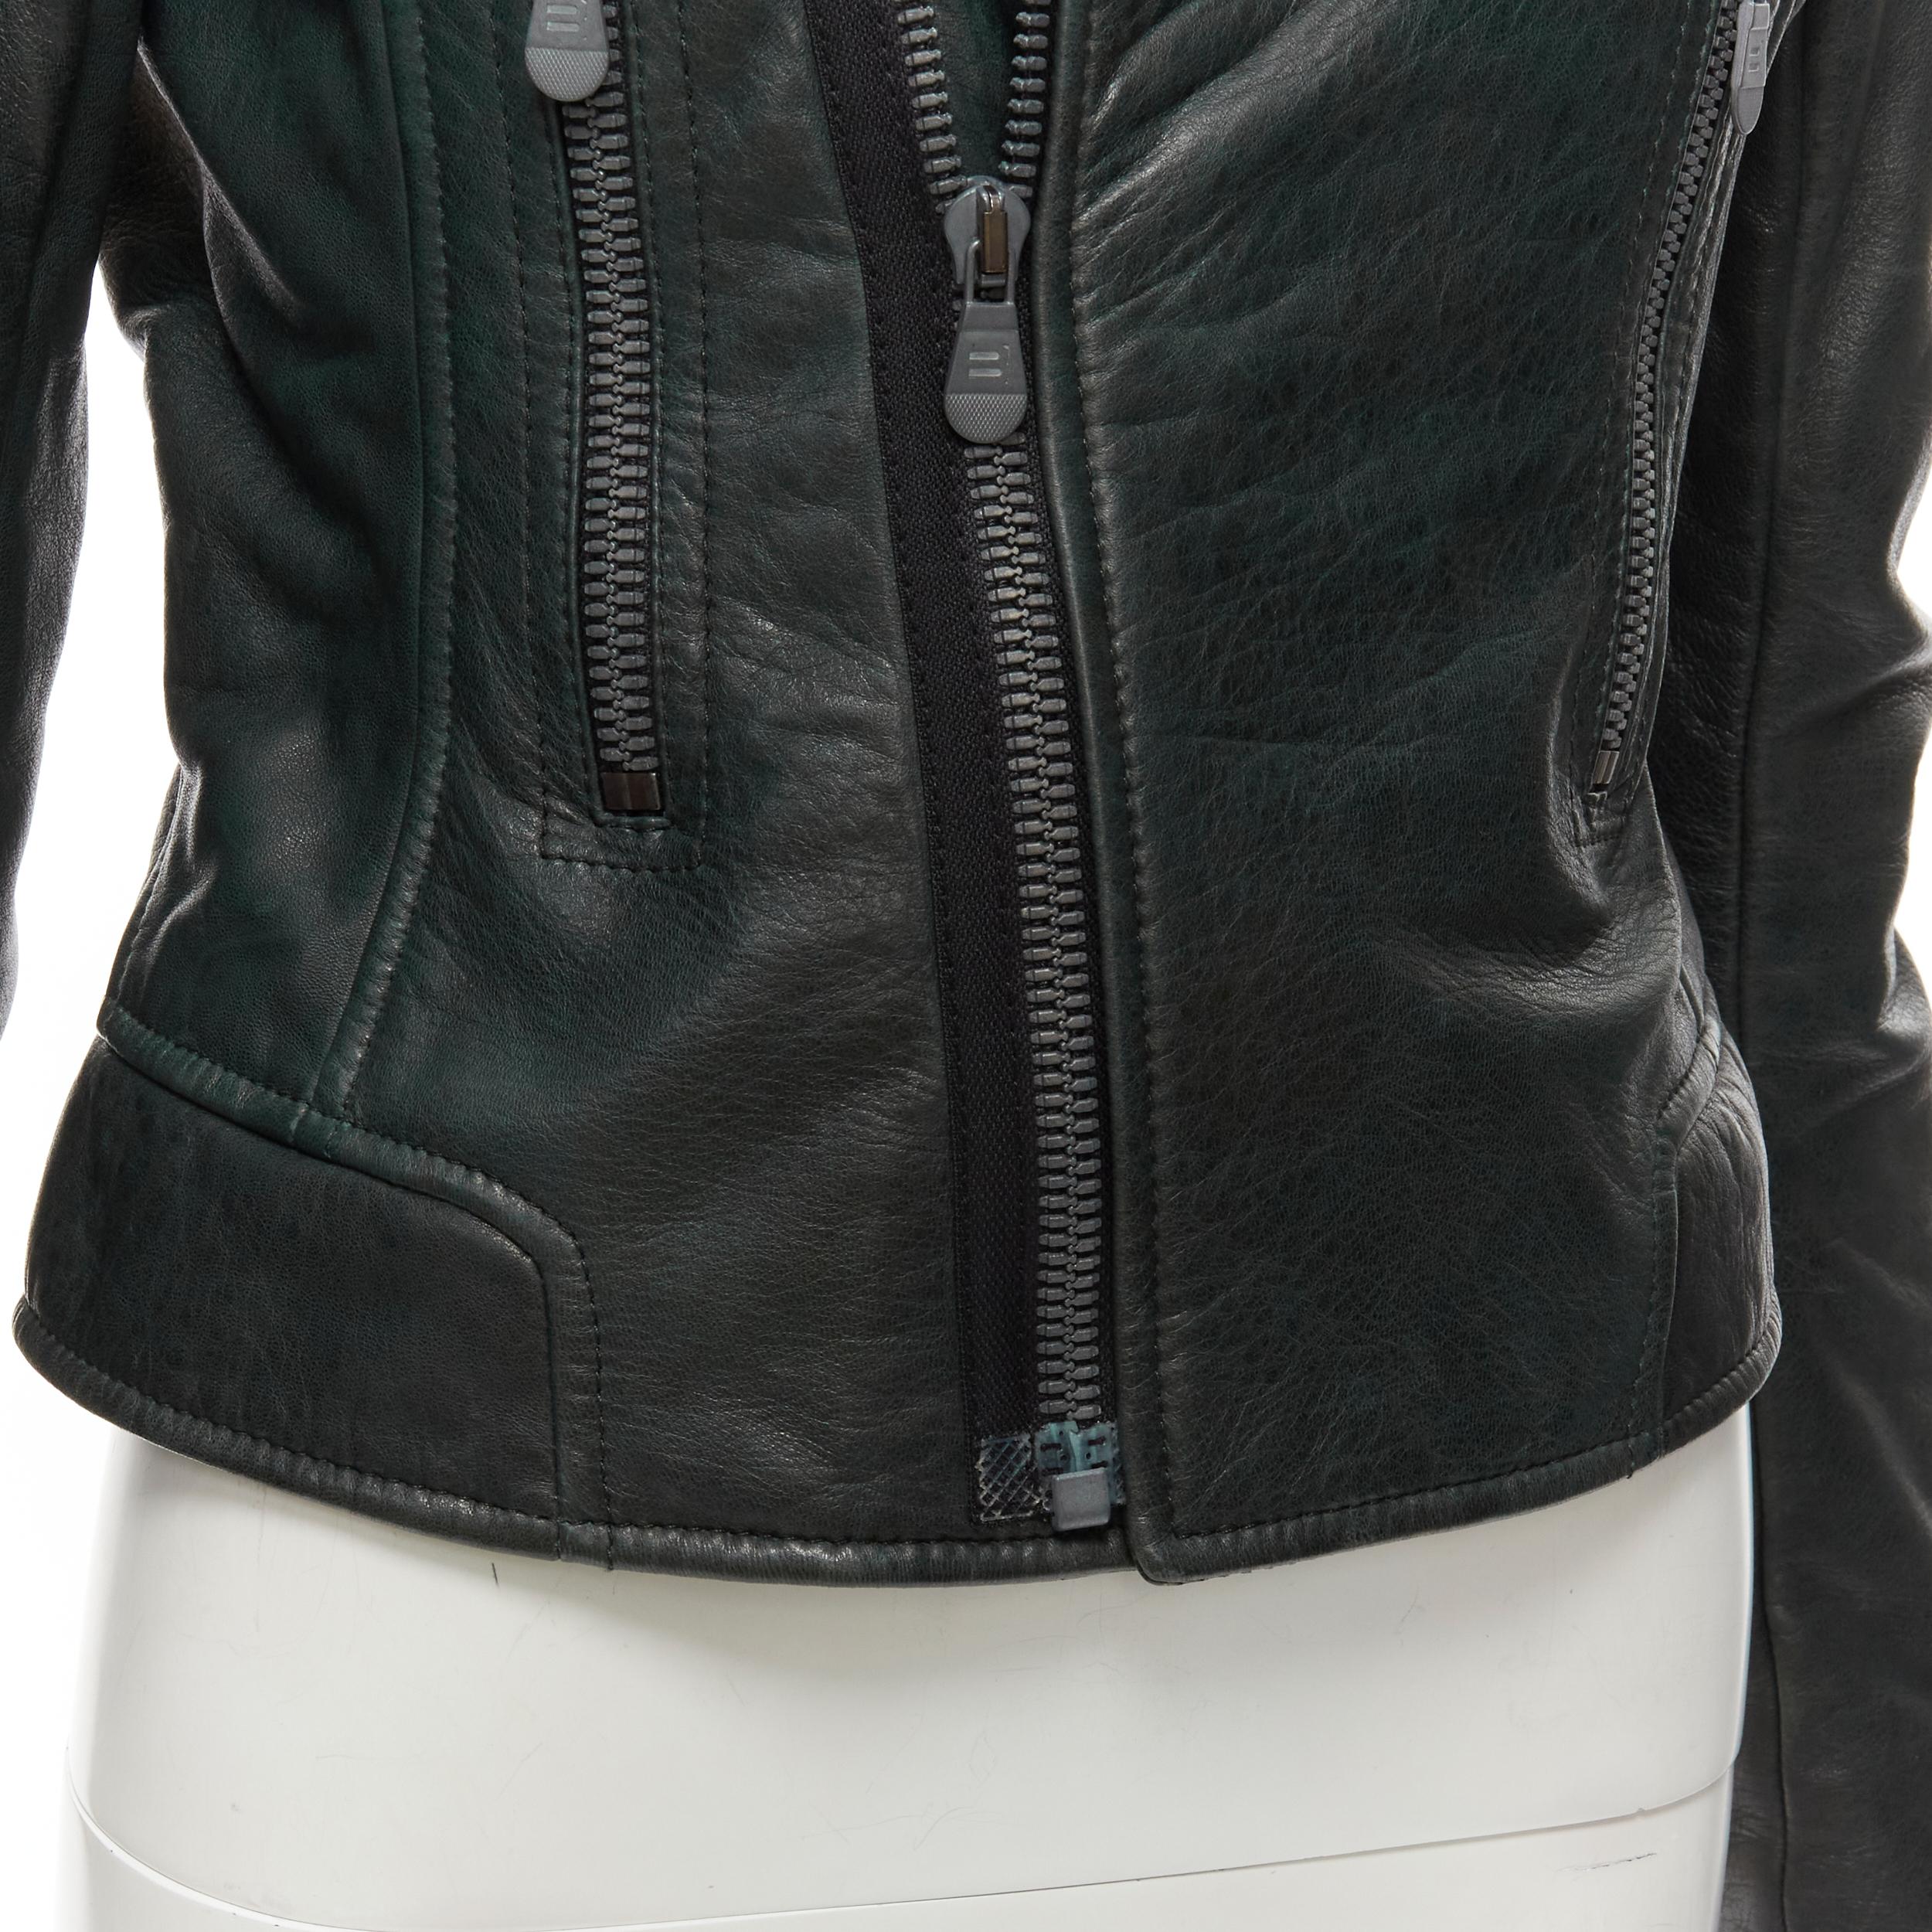 BALENCIAGA Nicholas Ghesquiere 2010 dark green tumbled leather biker jacket FR42 4